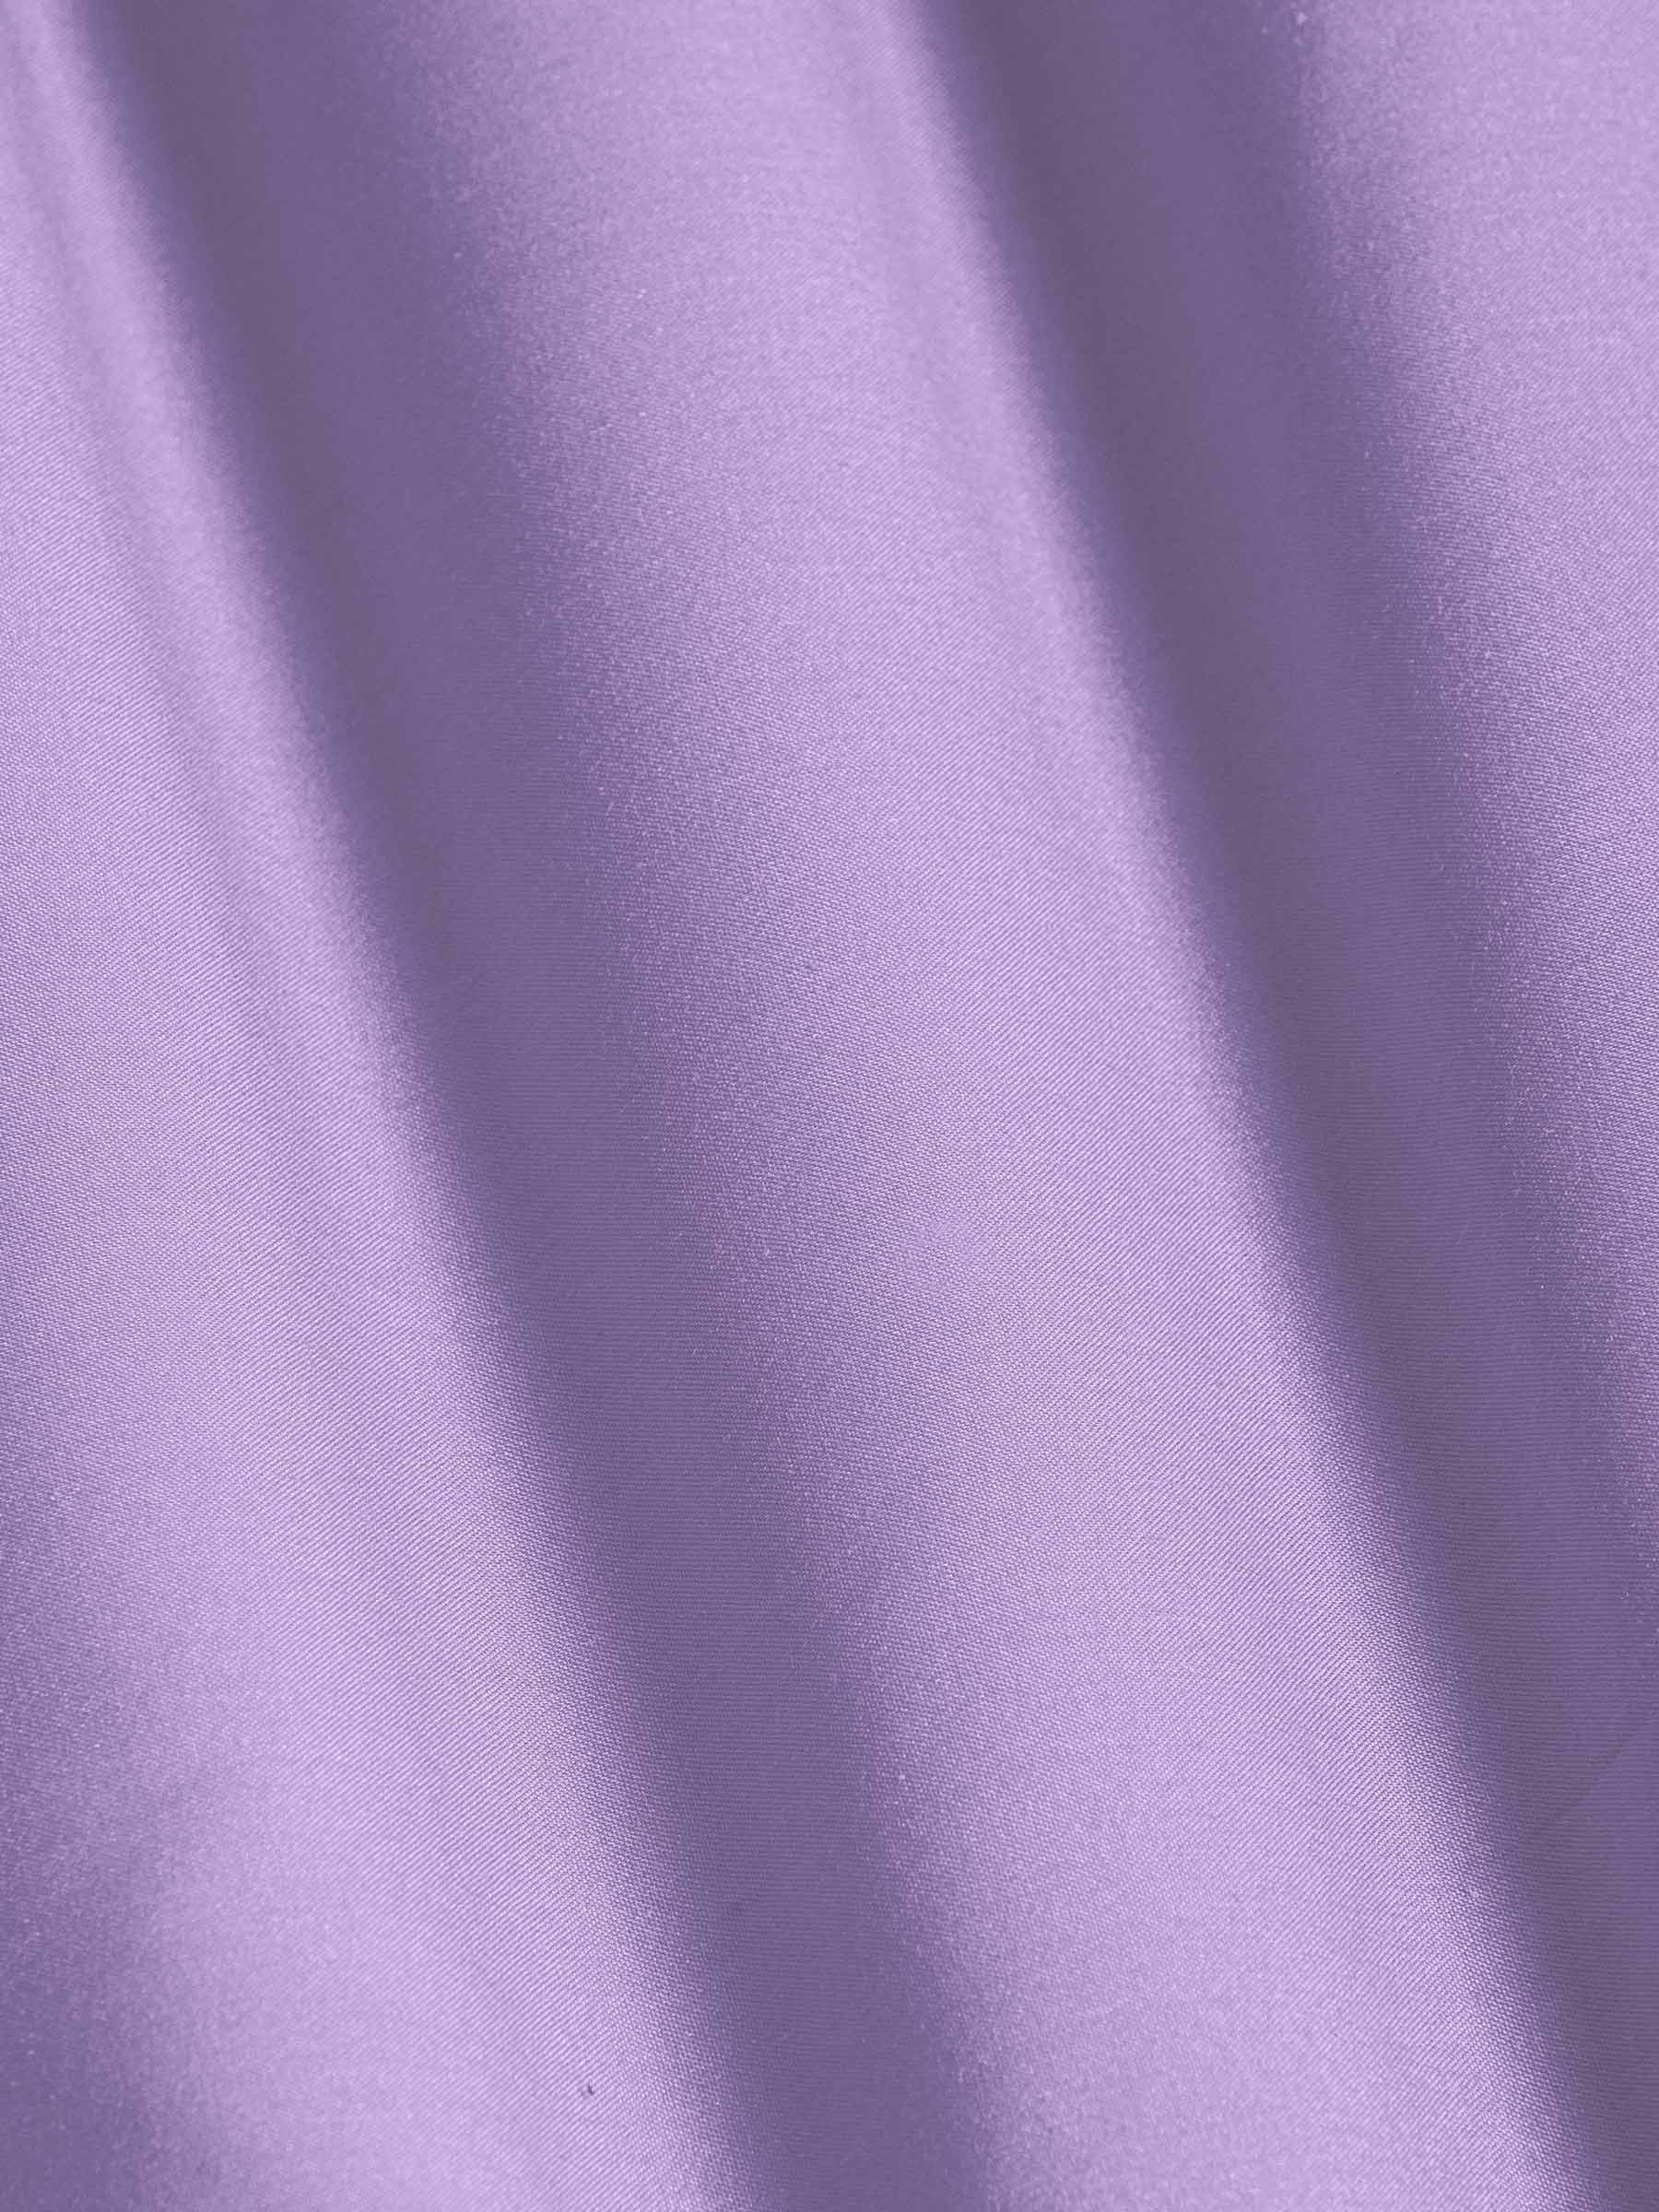 Leira Solid Lilac Long Sleeve Shirt